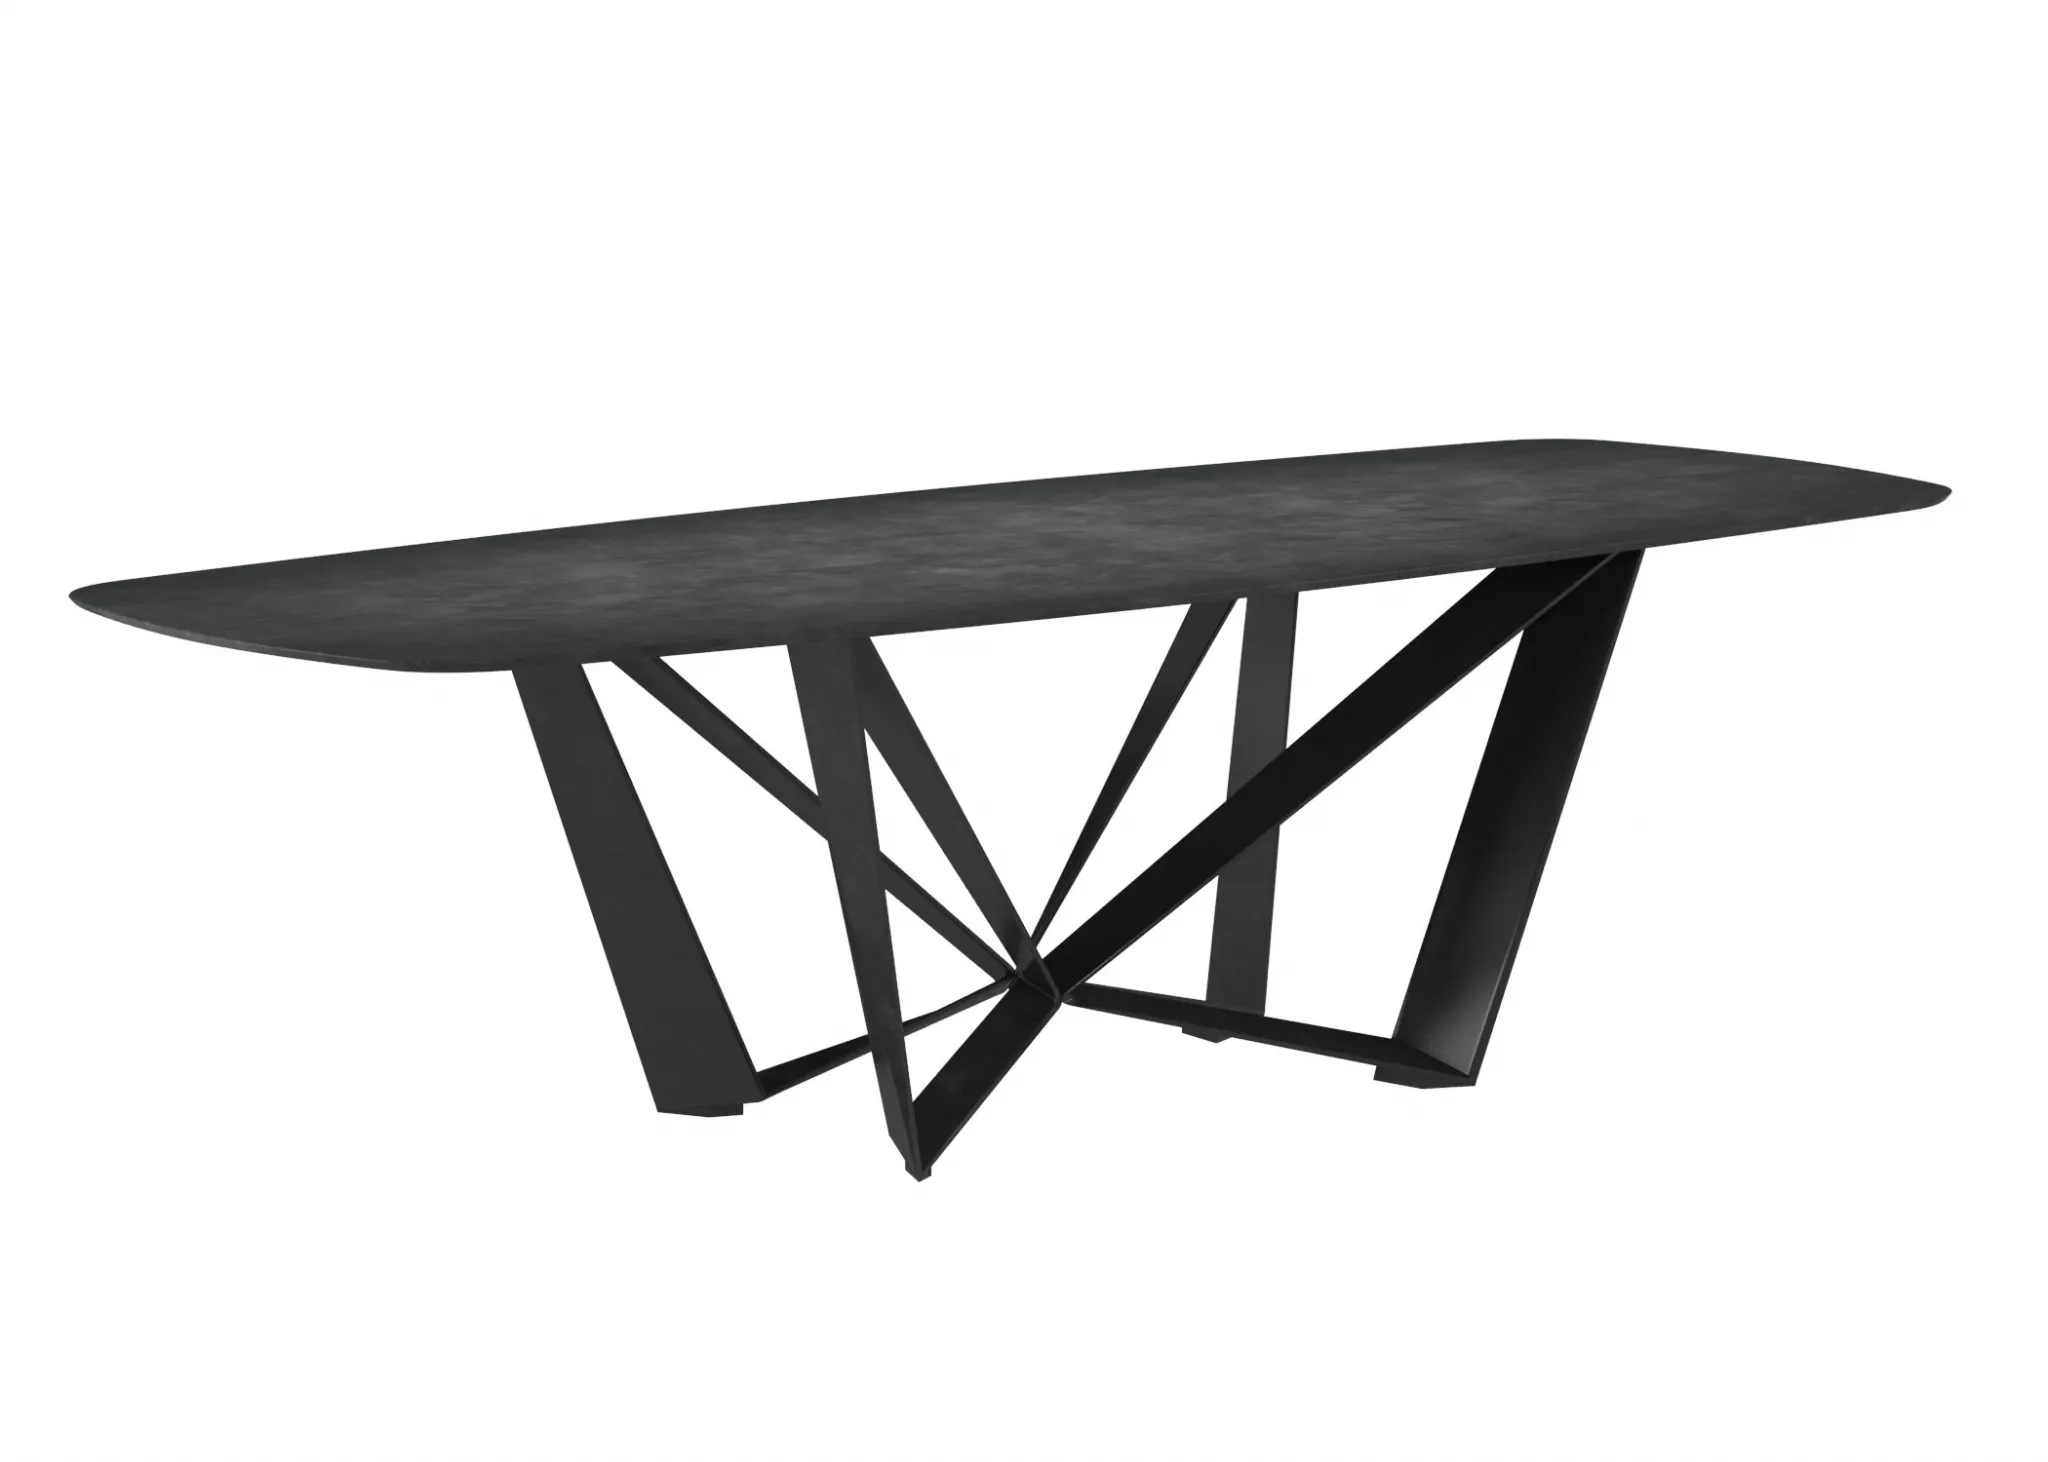 FURNITURE 3D MODELS – TABLES – 0245